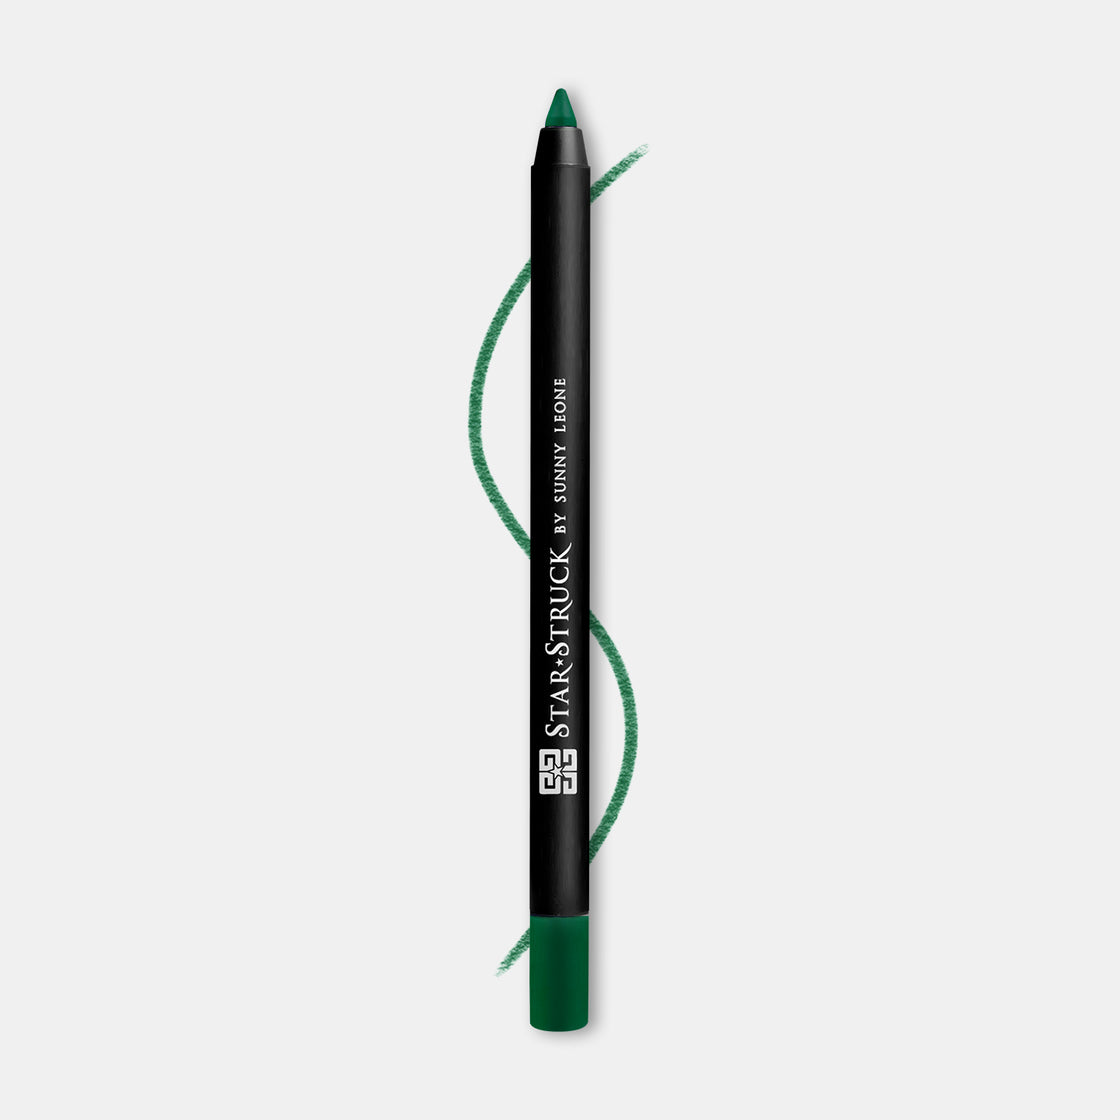 Pine - Colored Eyeliner Pencil, Matte Green | 1.2gms